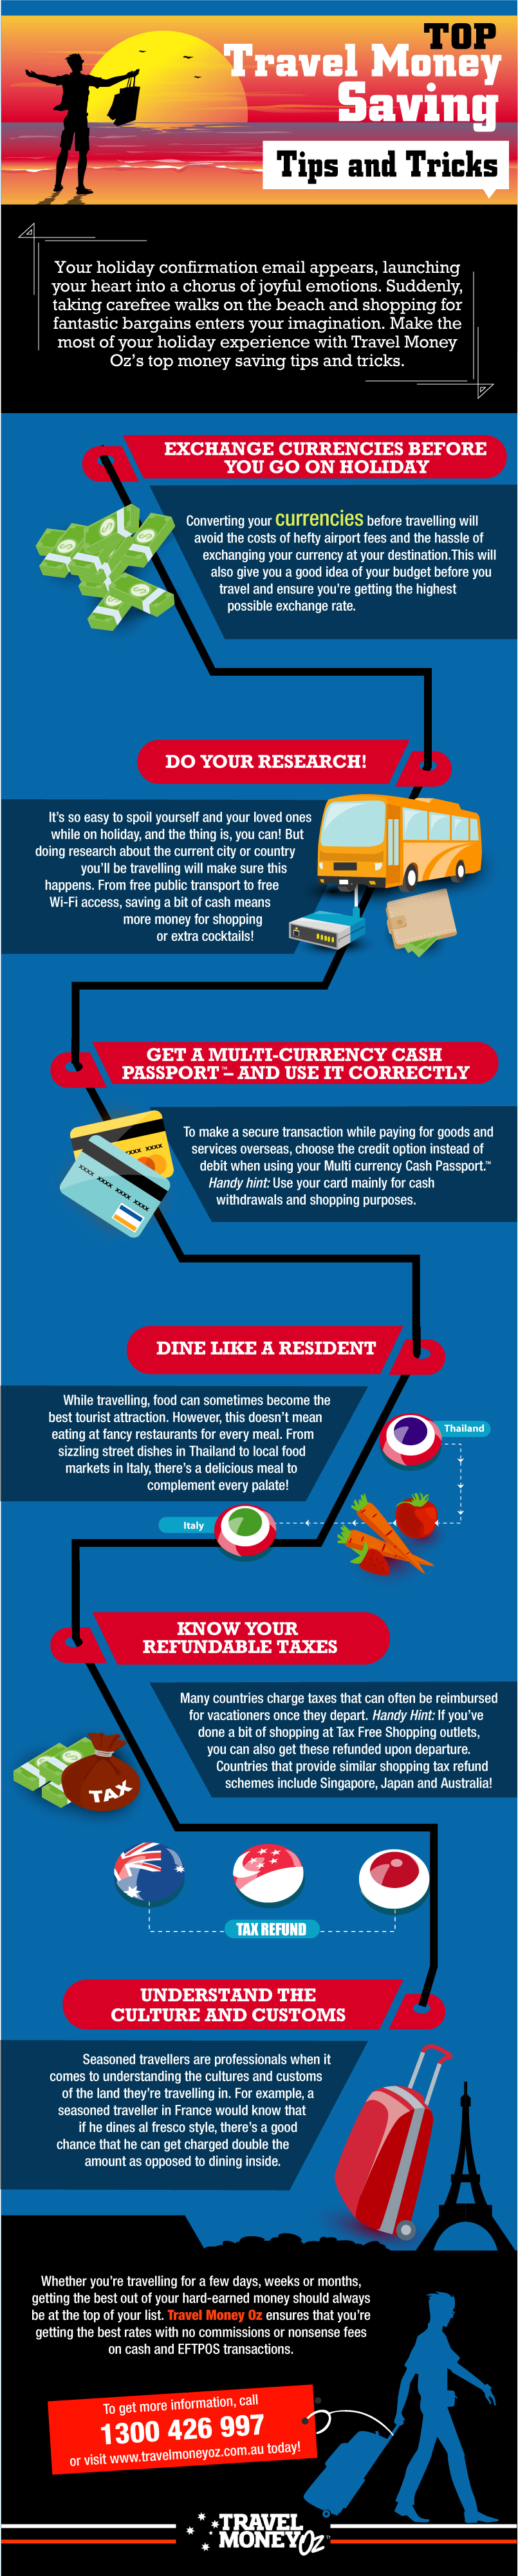 Top Travel Money Saving Tips and Tricks